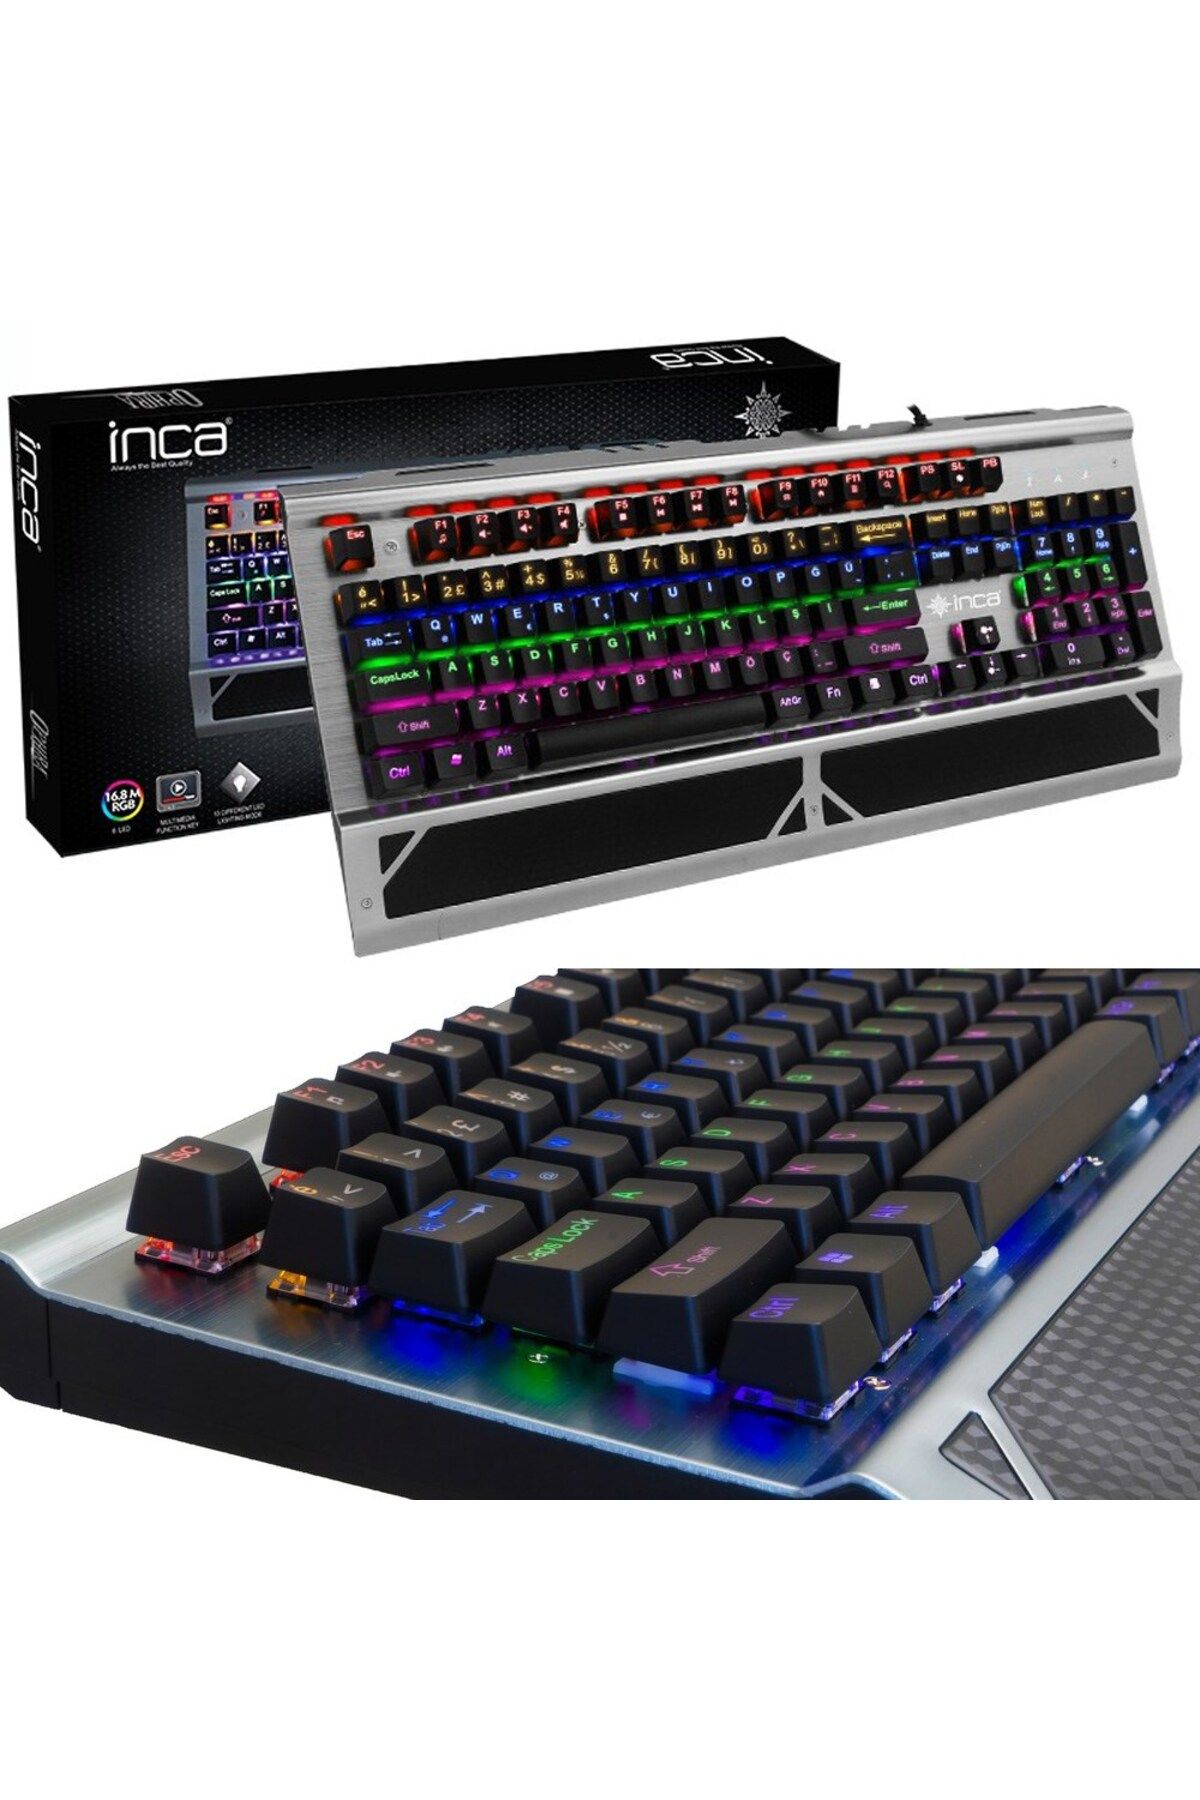 Inca Ikg-444 Ophira Professional Switch Rgb Mekanik Gamig Keyboard